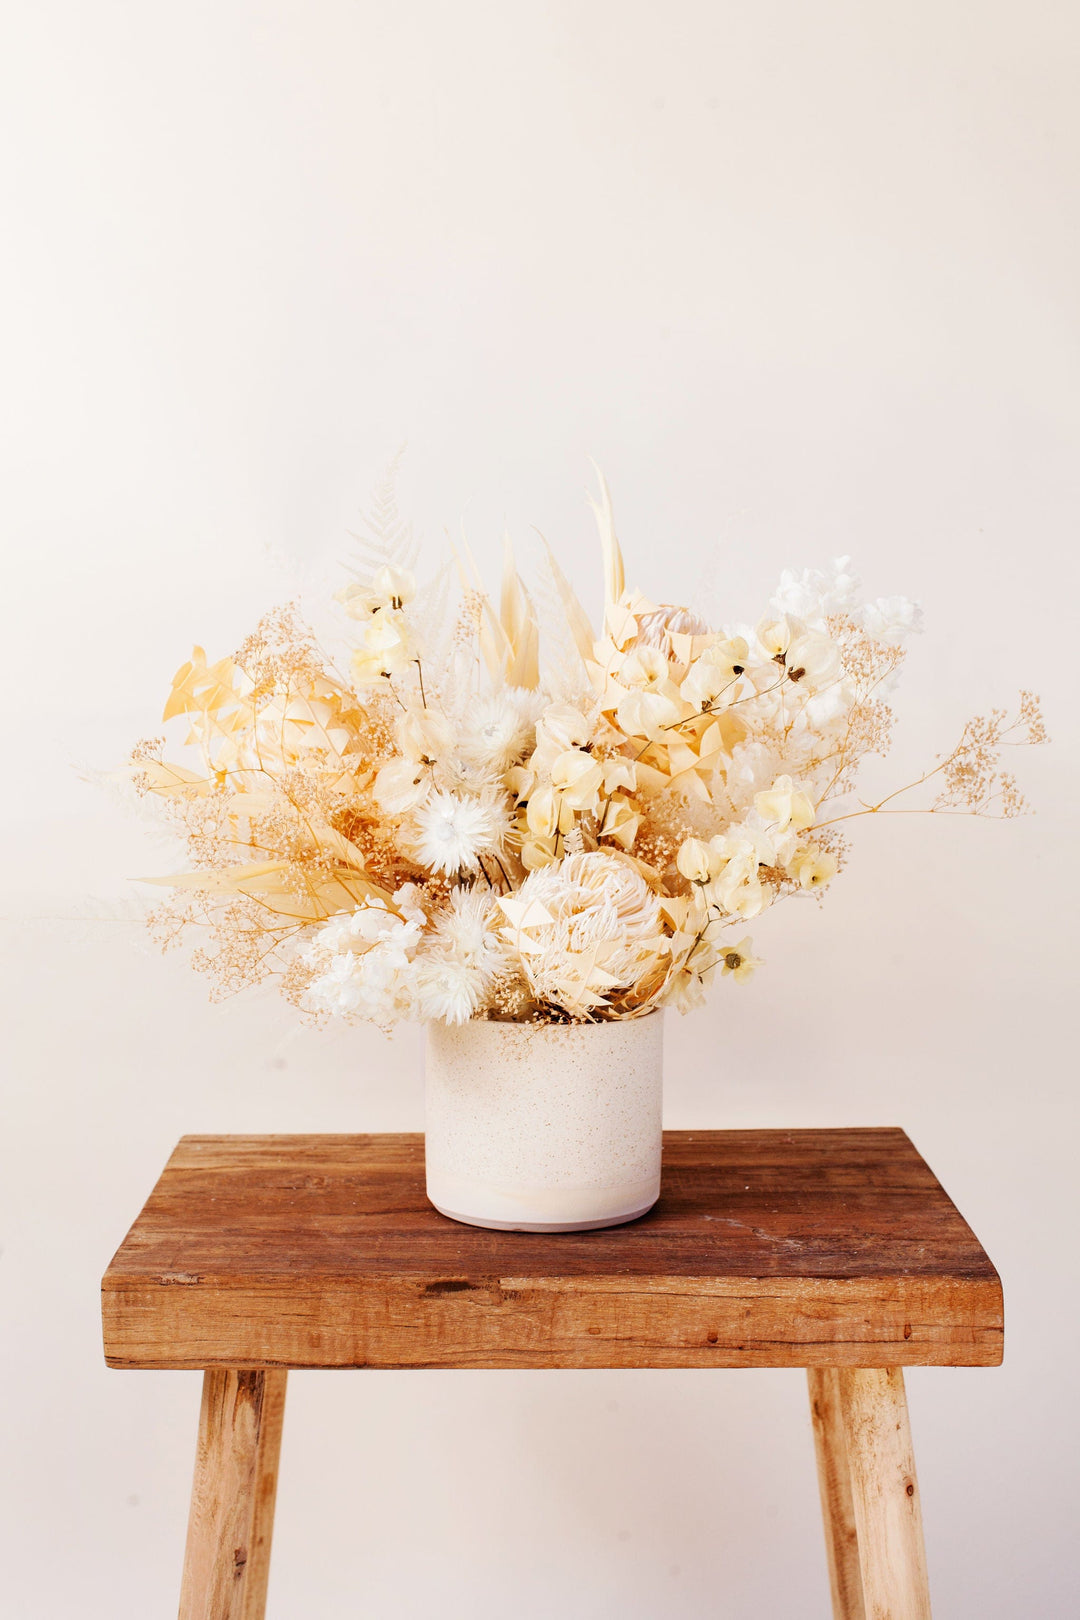 Idlewild Floral Co. Neutral Cream & Tan Centerpiece in Ceramic Vase